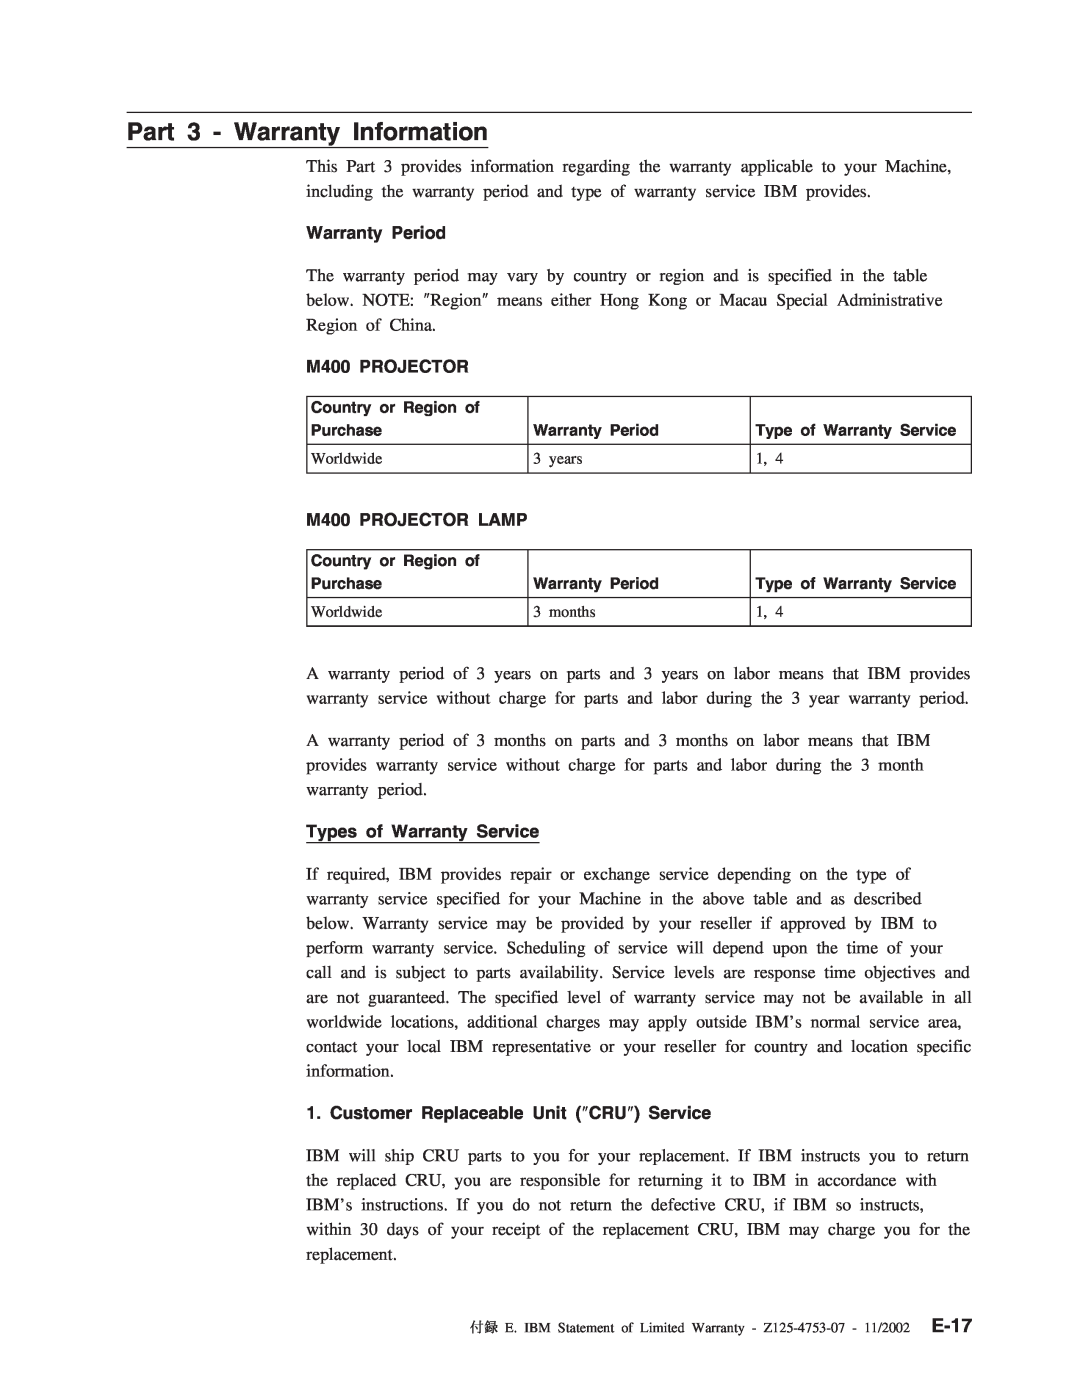 IBM manual Part 3 - Warranty Information, Warranty Period, M400 PROJECTOR LAMP, Types of Warranty Service 